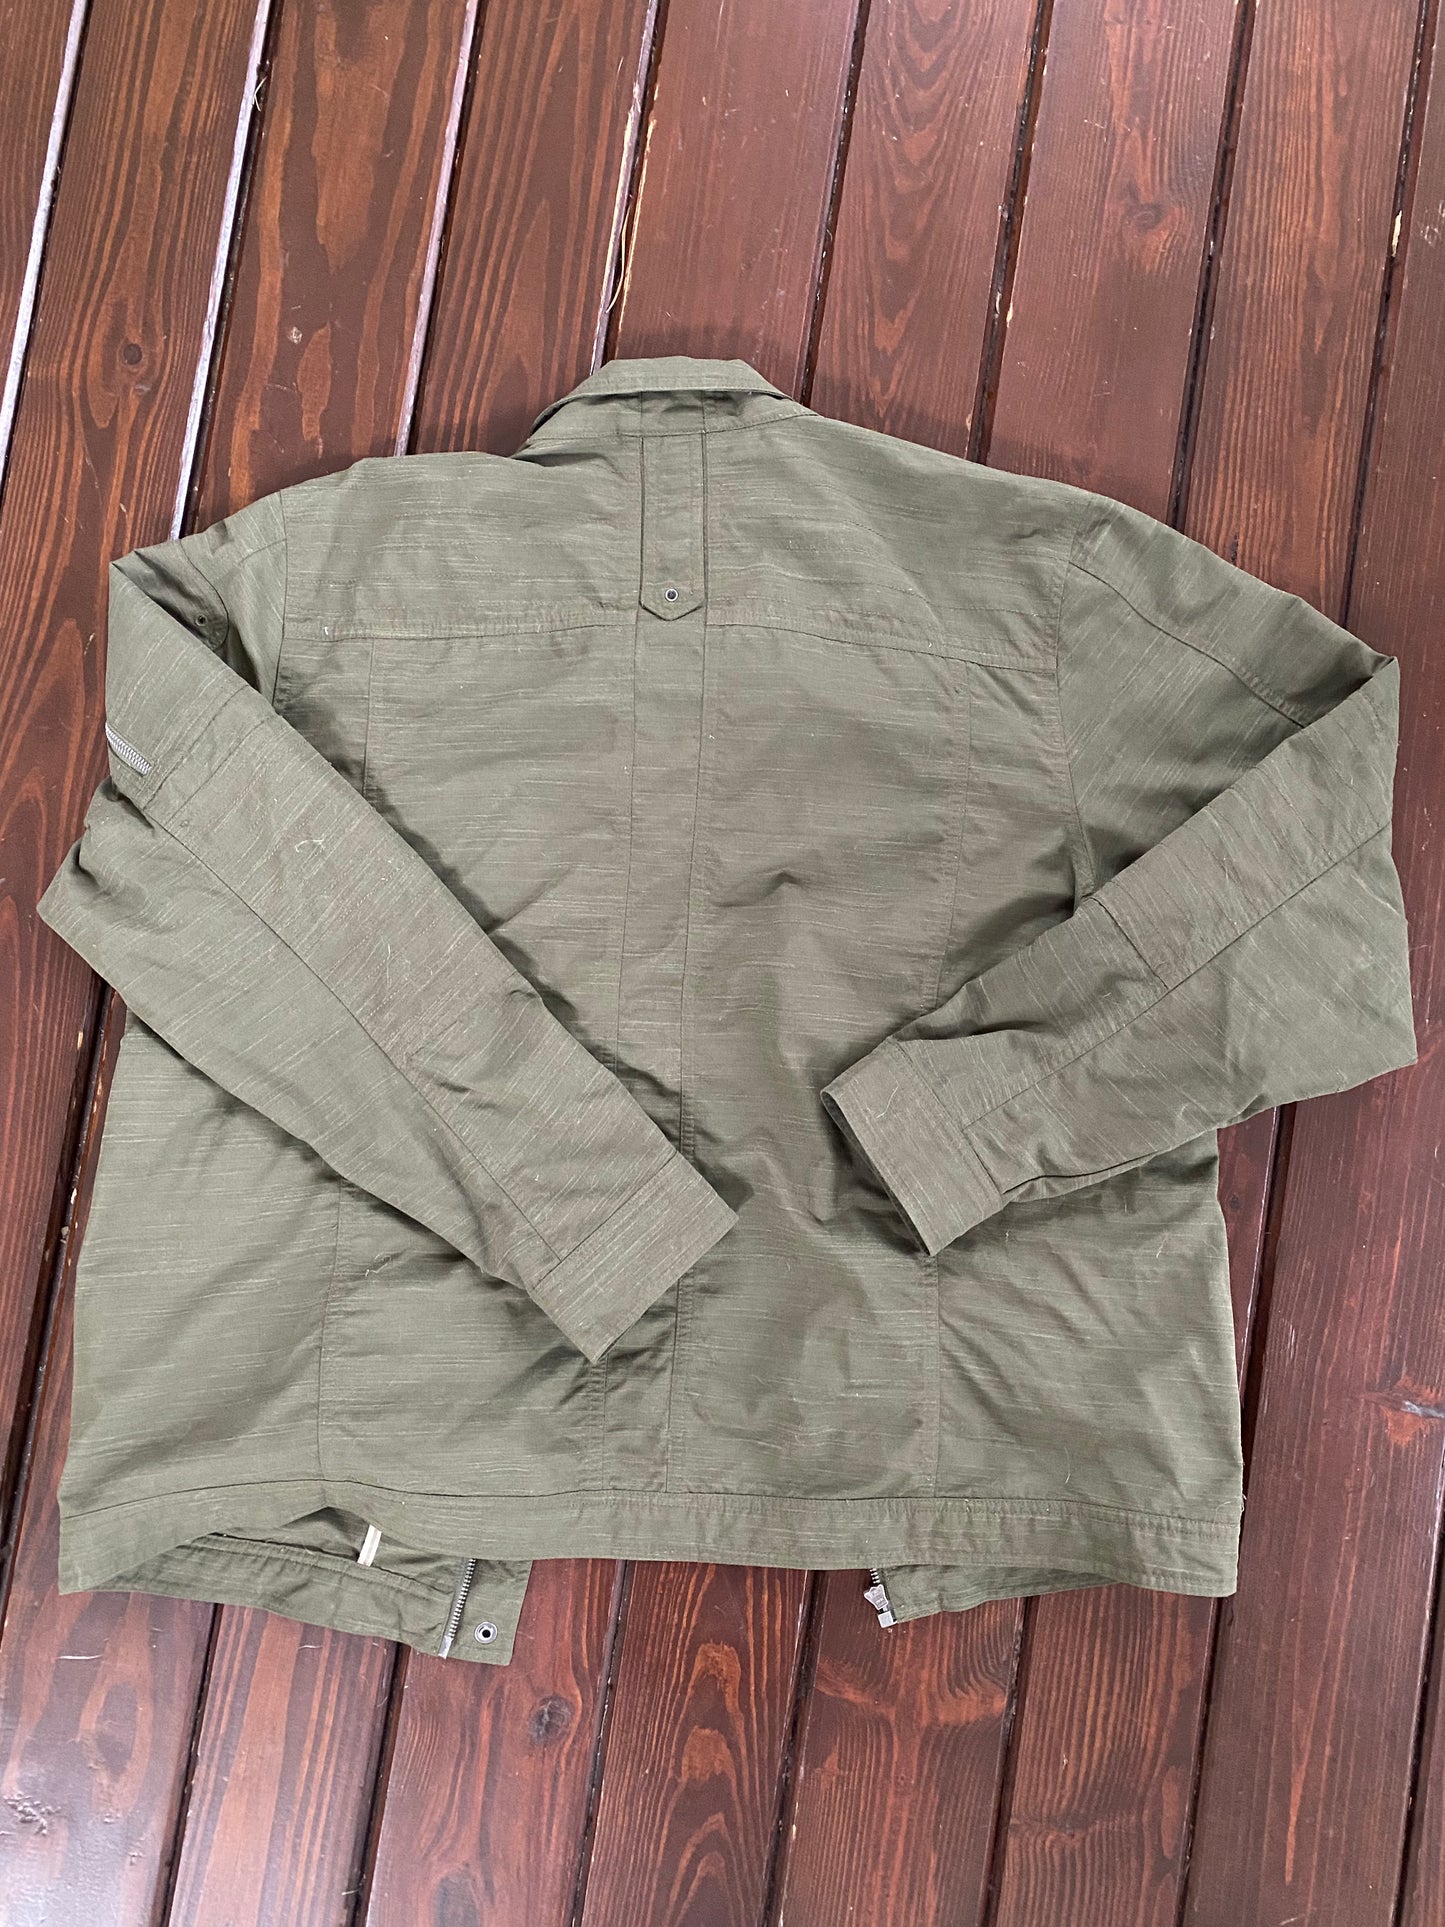 REI Nylon Outdoor Jacket - Brimm Archive Wardrobe Research